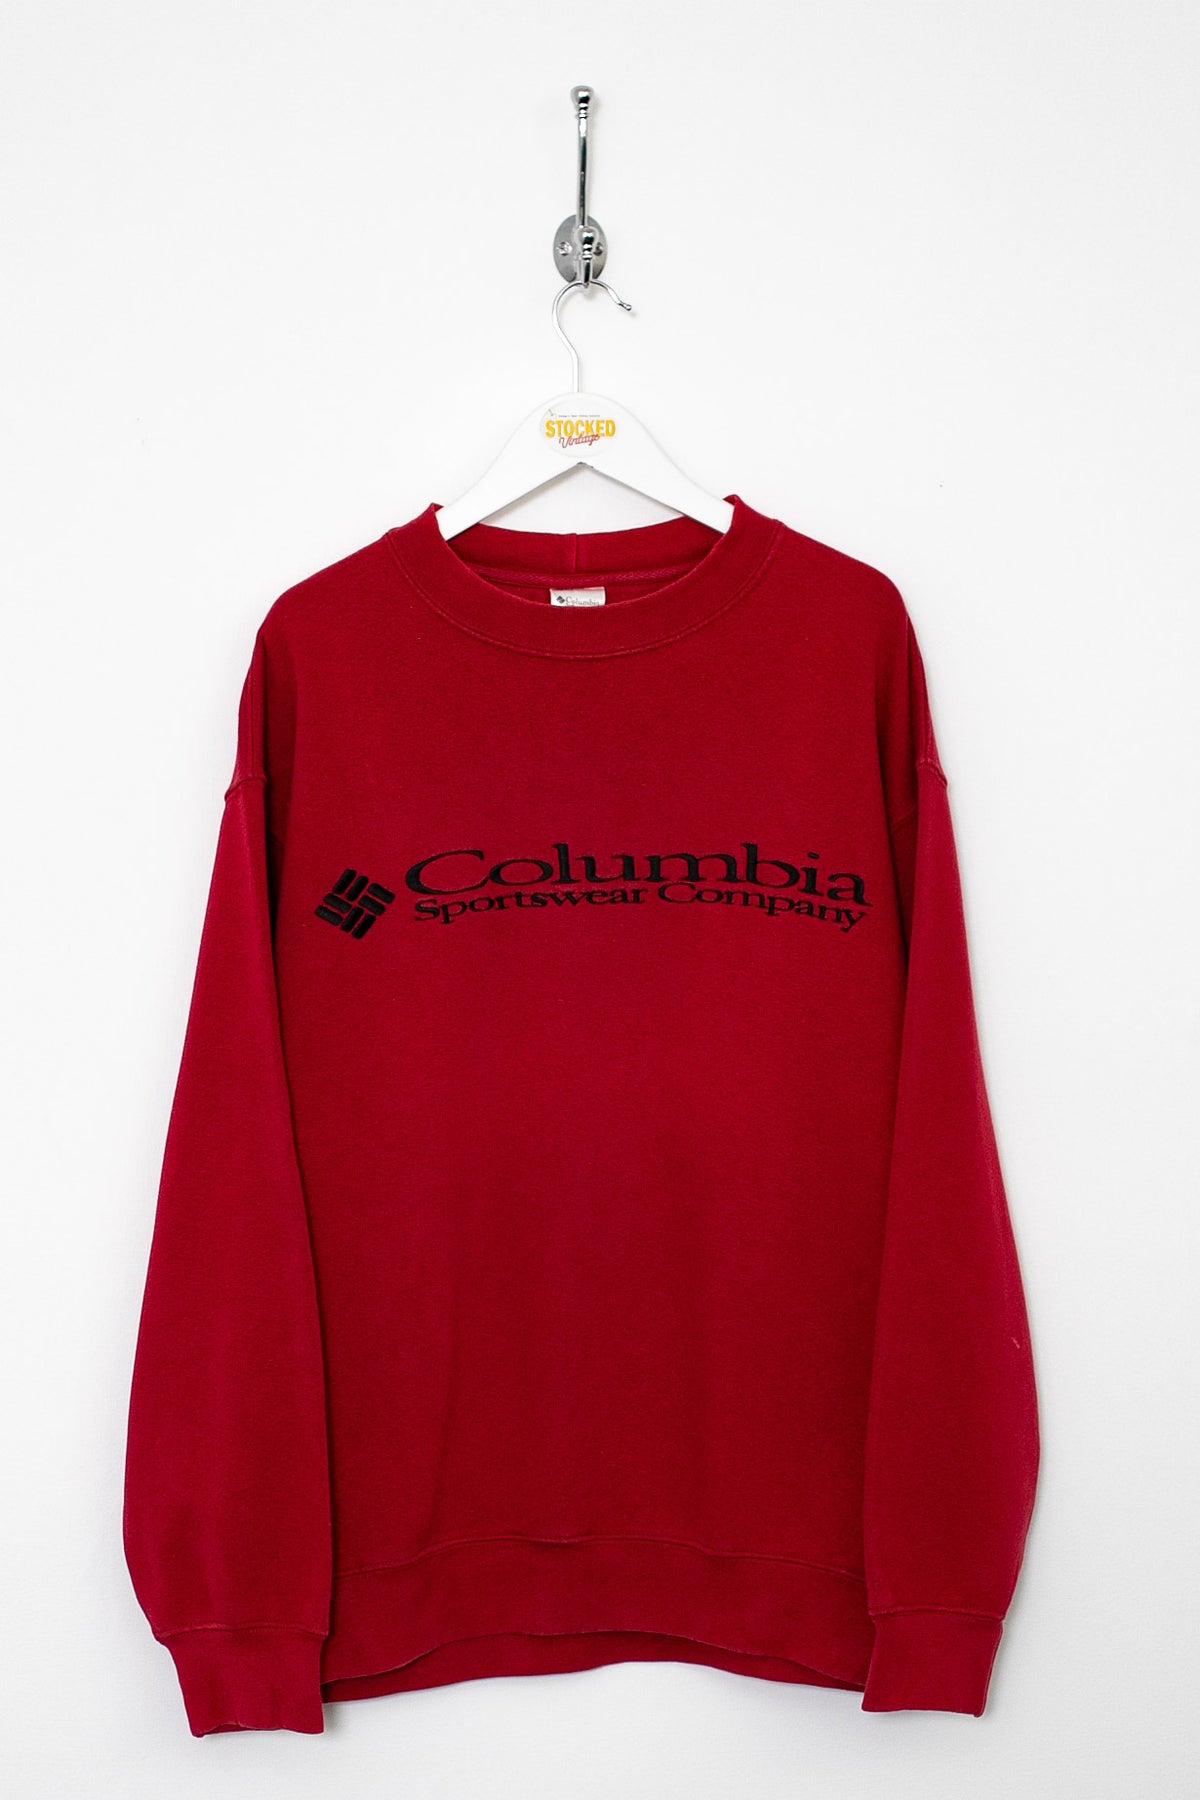 00s Columbia Sweatshirt (M)